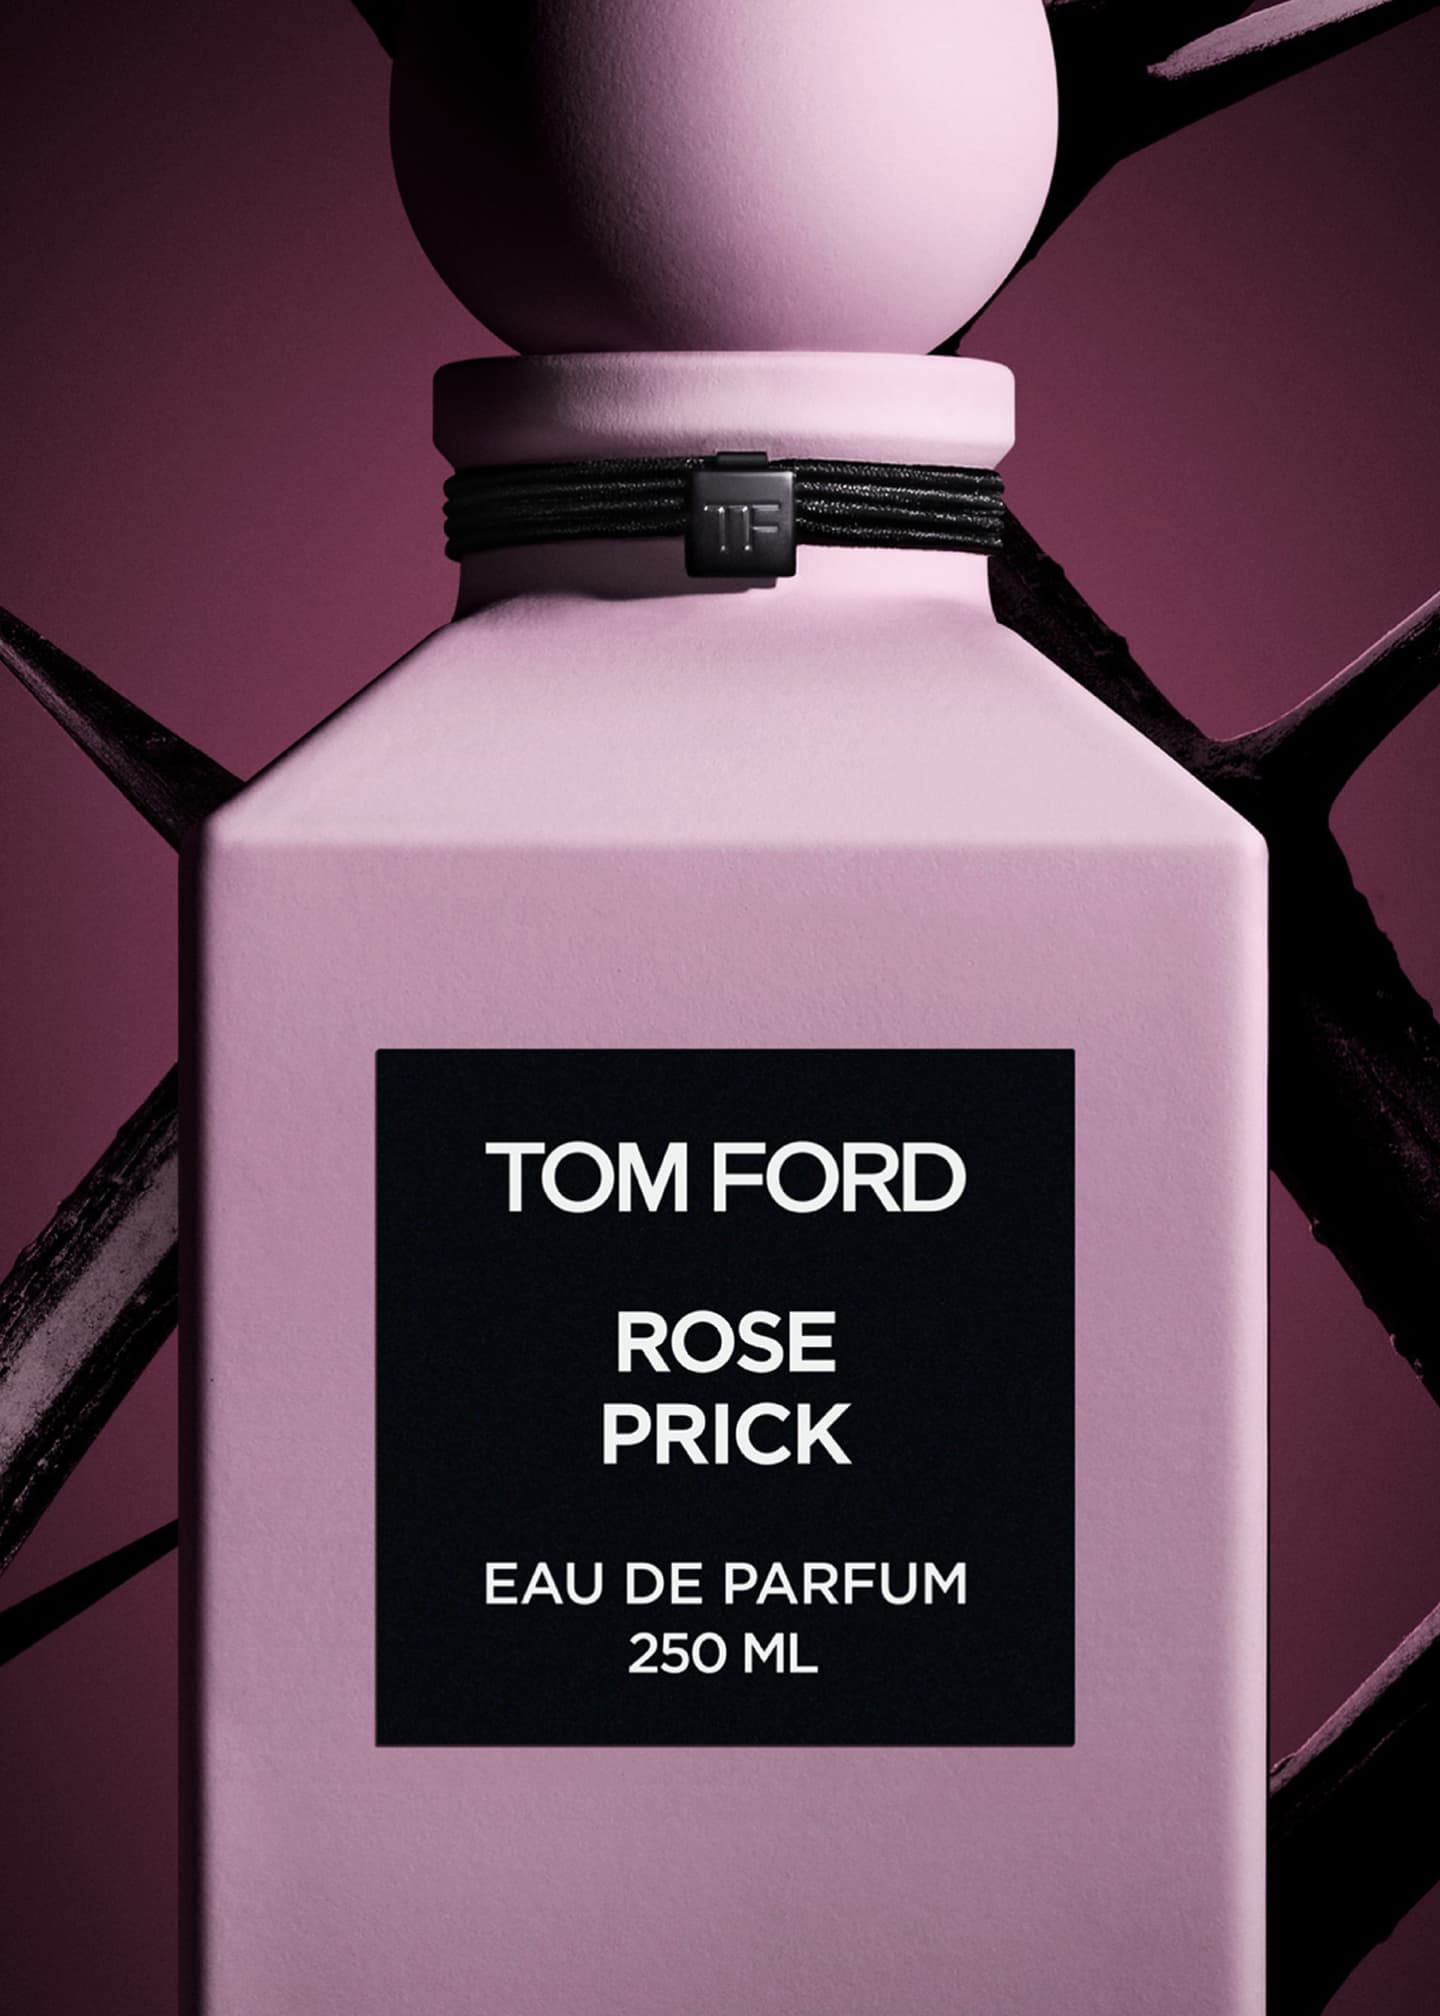 TOM FORD Rose Prick Eau de Parfum Fragrance 250ml Decanter Image 3 of 4